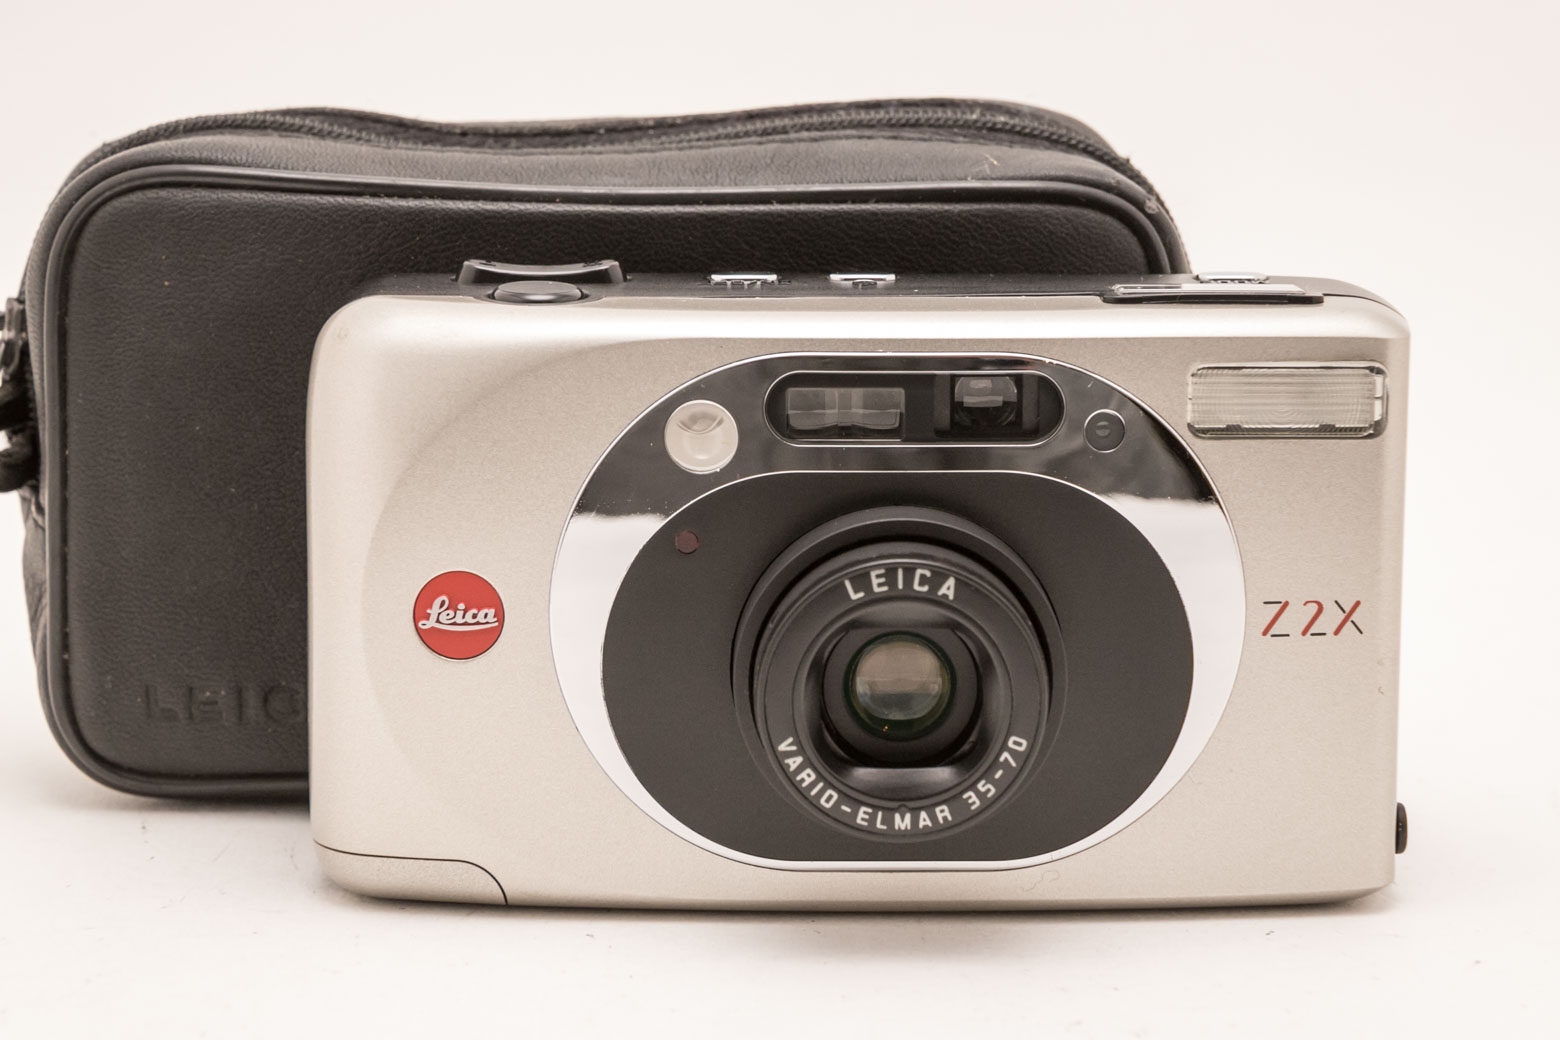 Leica Z2X コンパクトフィルムカメラ - きつね堂 - 練馬の中古カメラ 